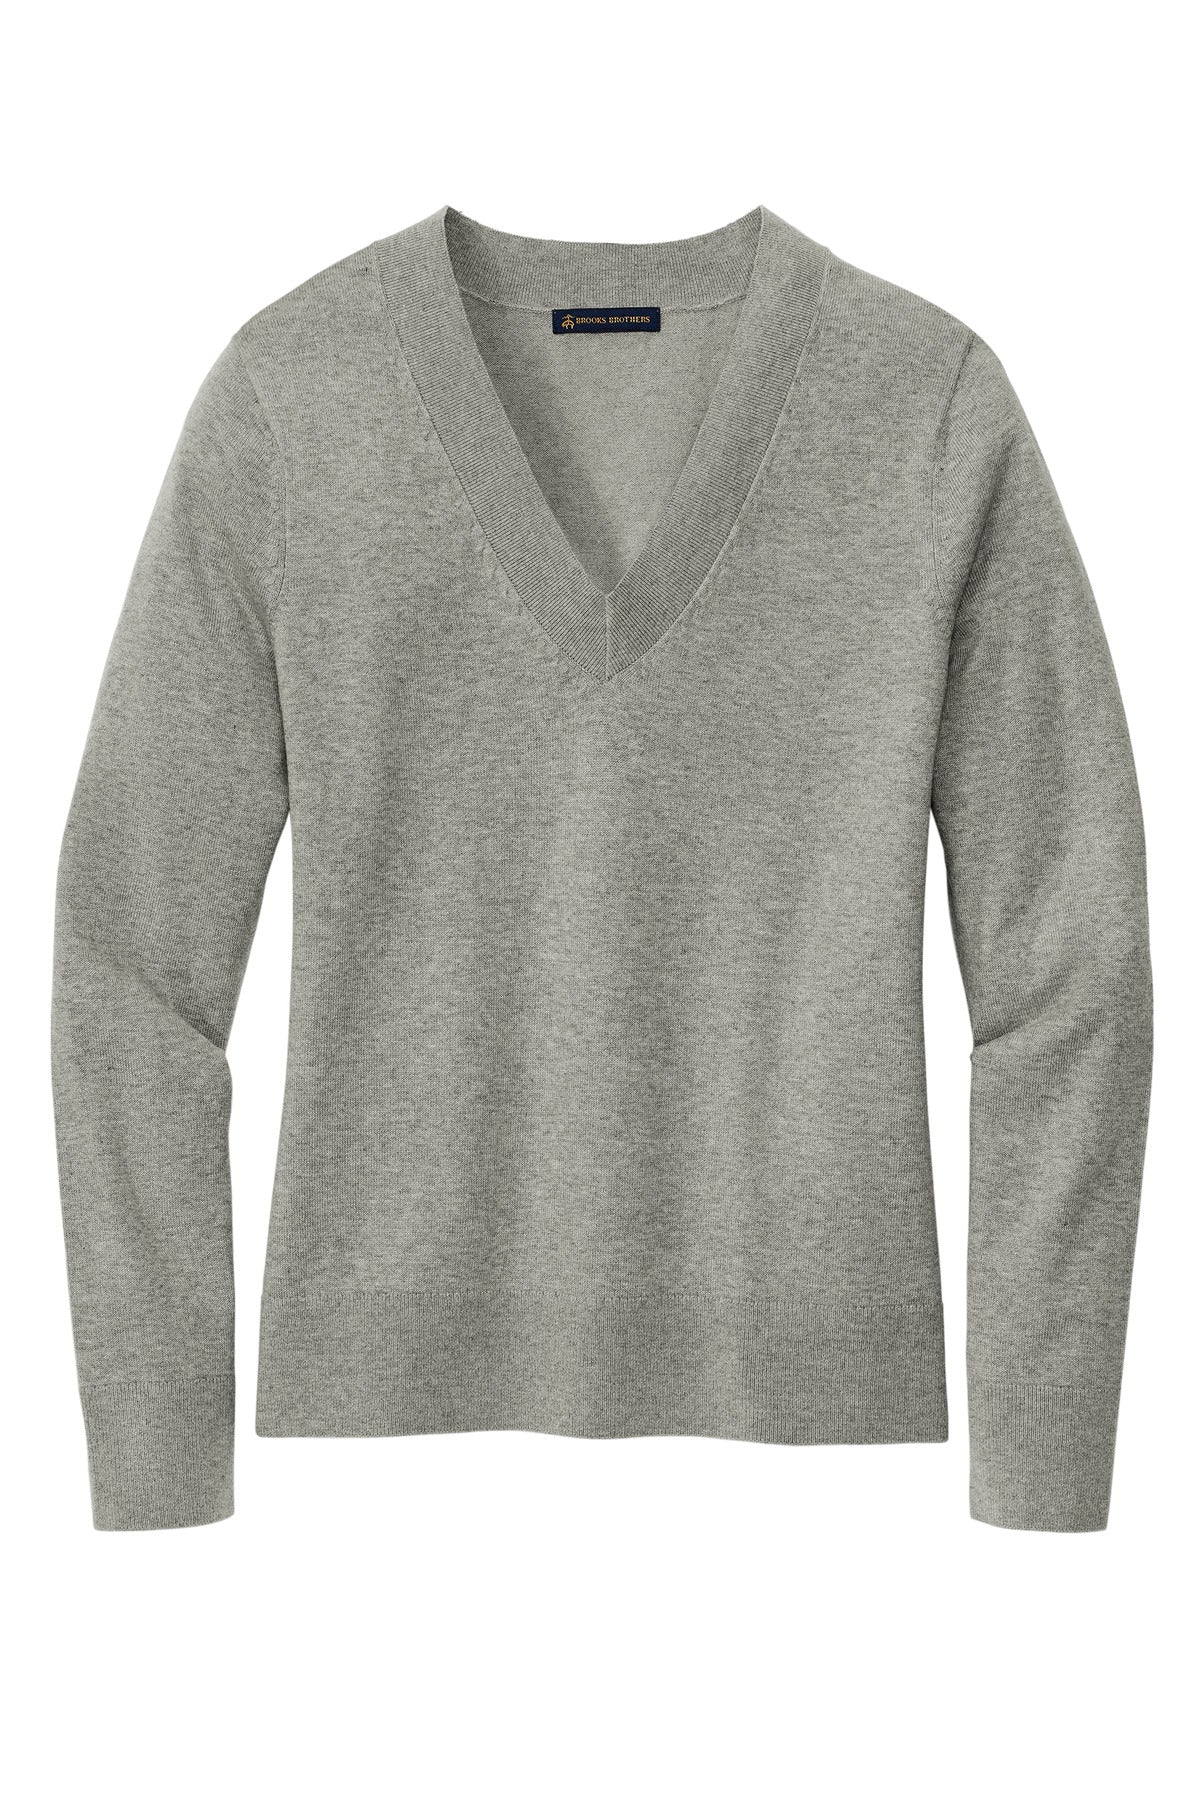 Brooks Brothers® Women's Cotton Stretch V-Neck Sweater BB18401